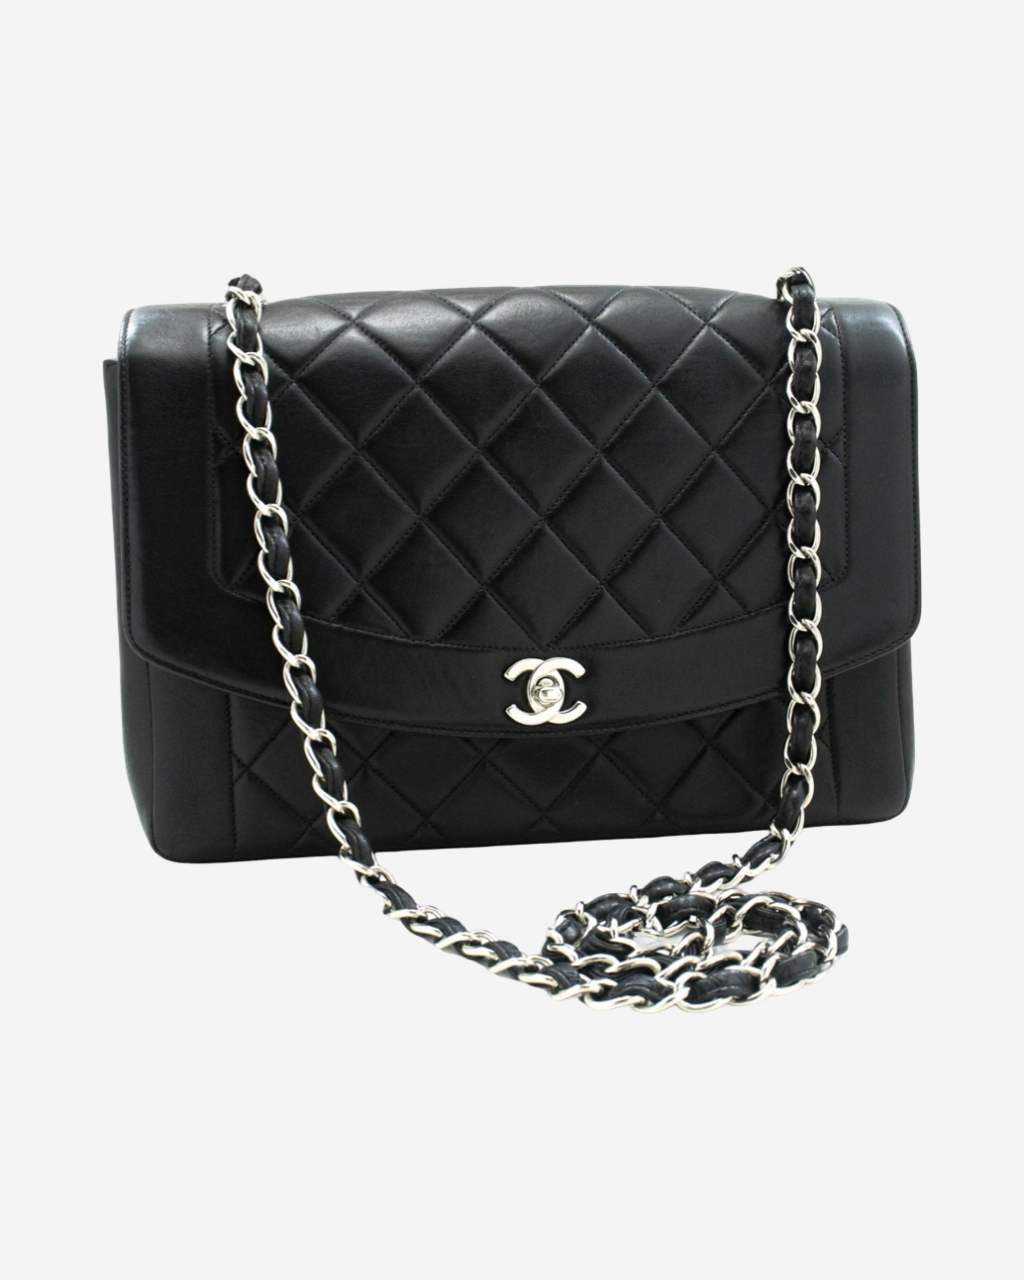 Chanel Diana Jumbo Bag